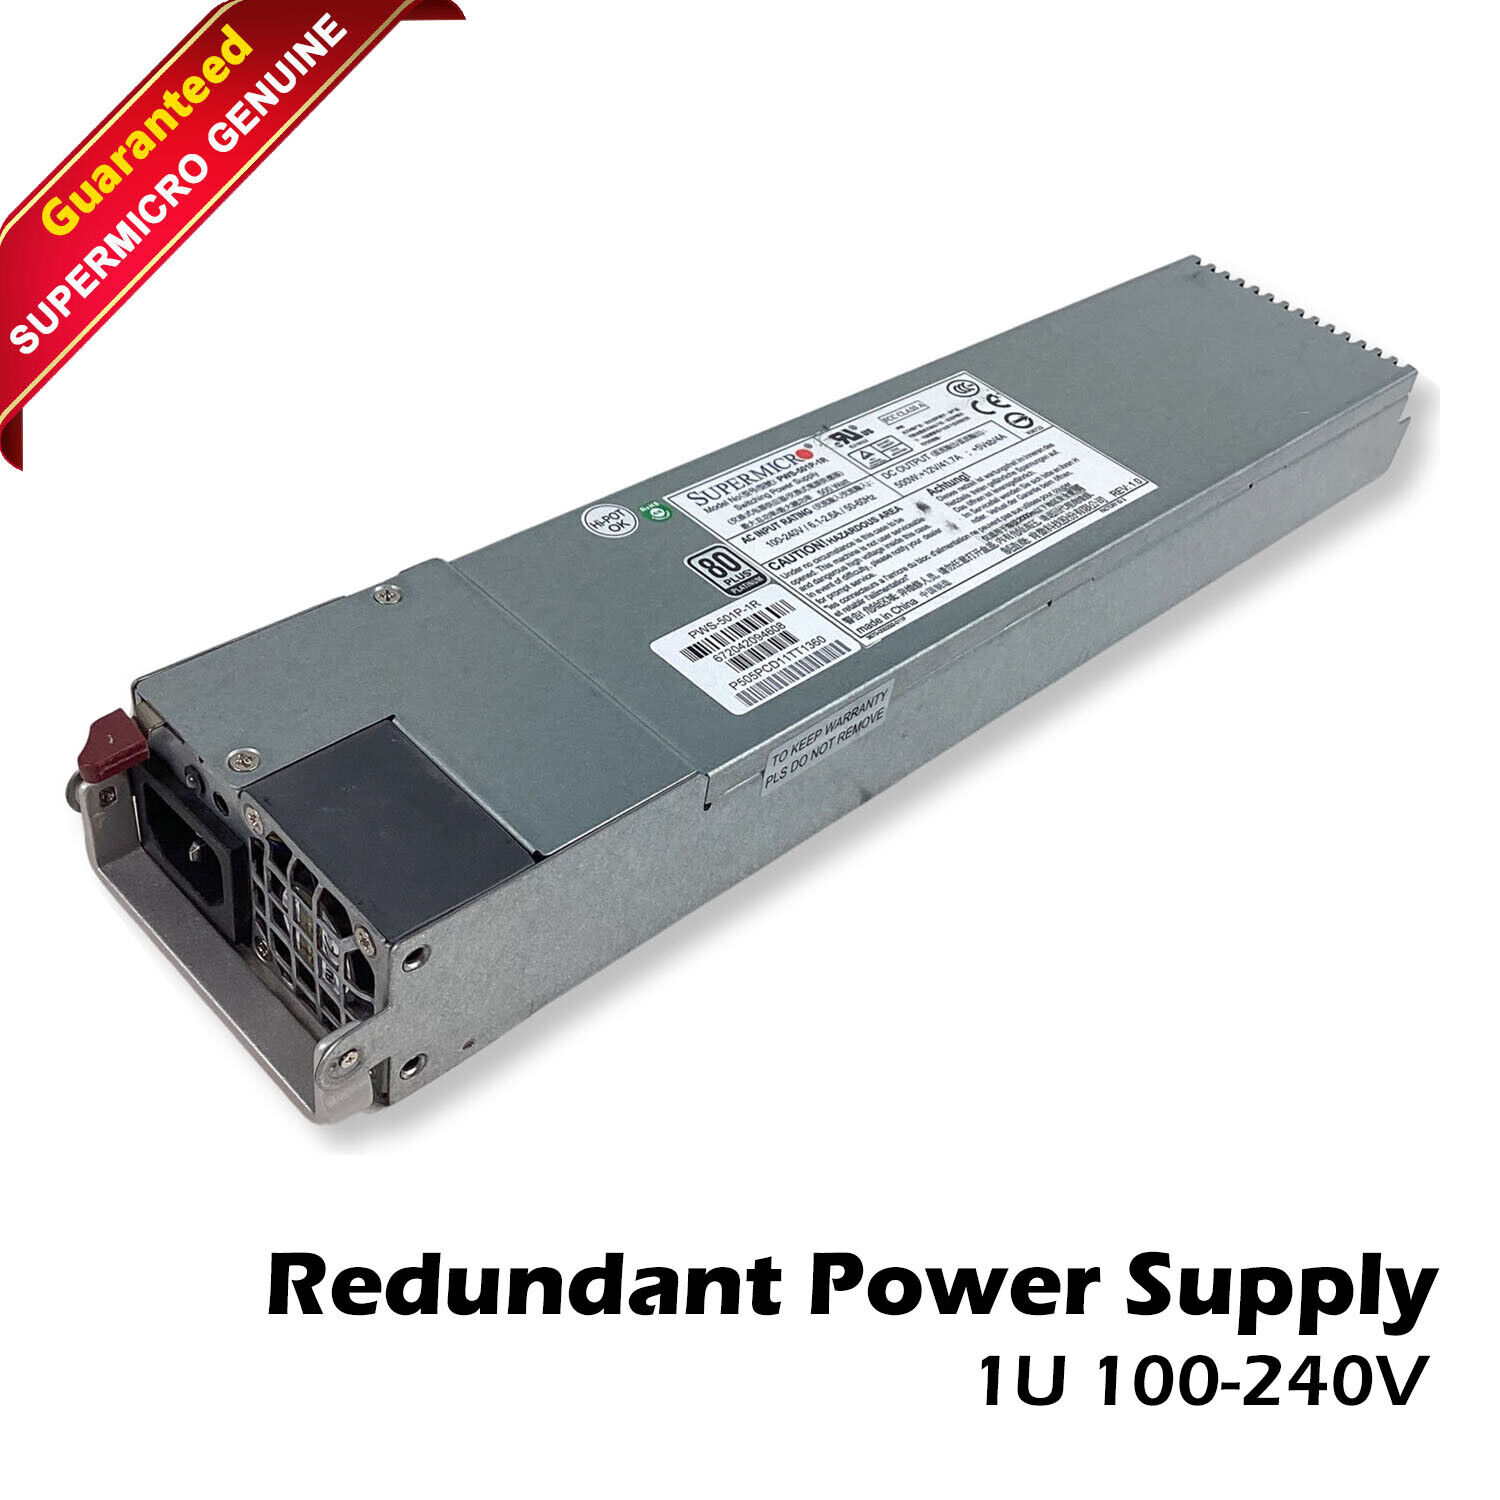 Genuine SuperMicro PWS-501P-1R 80 Plus Platinum 500W Redundant Power Supply